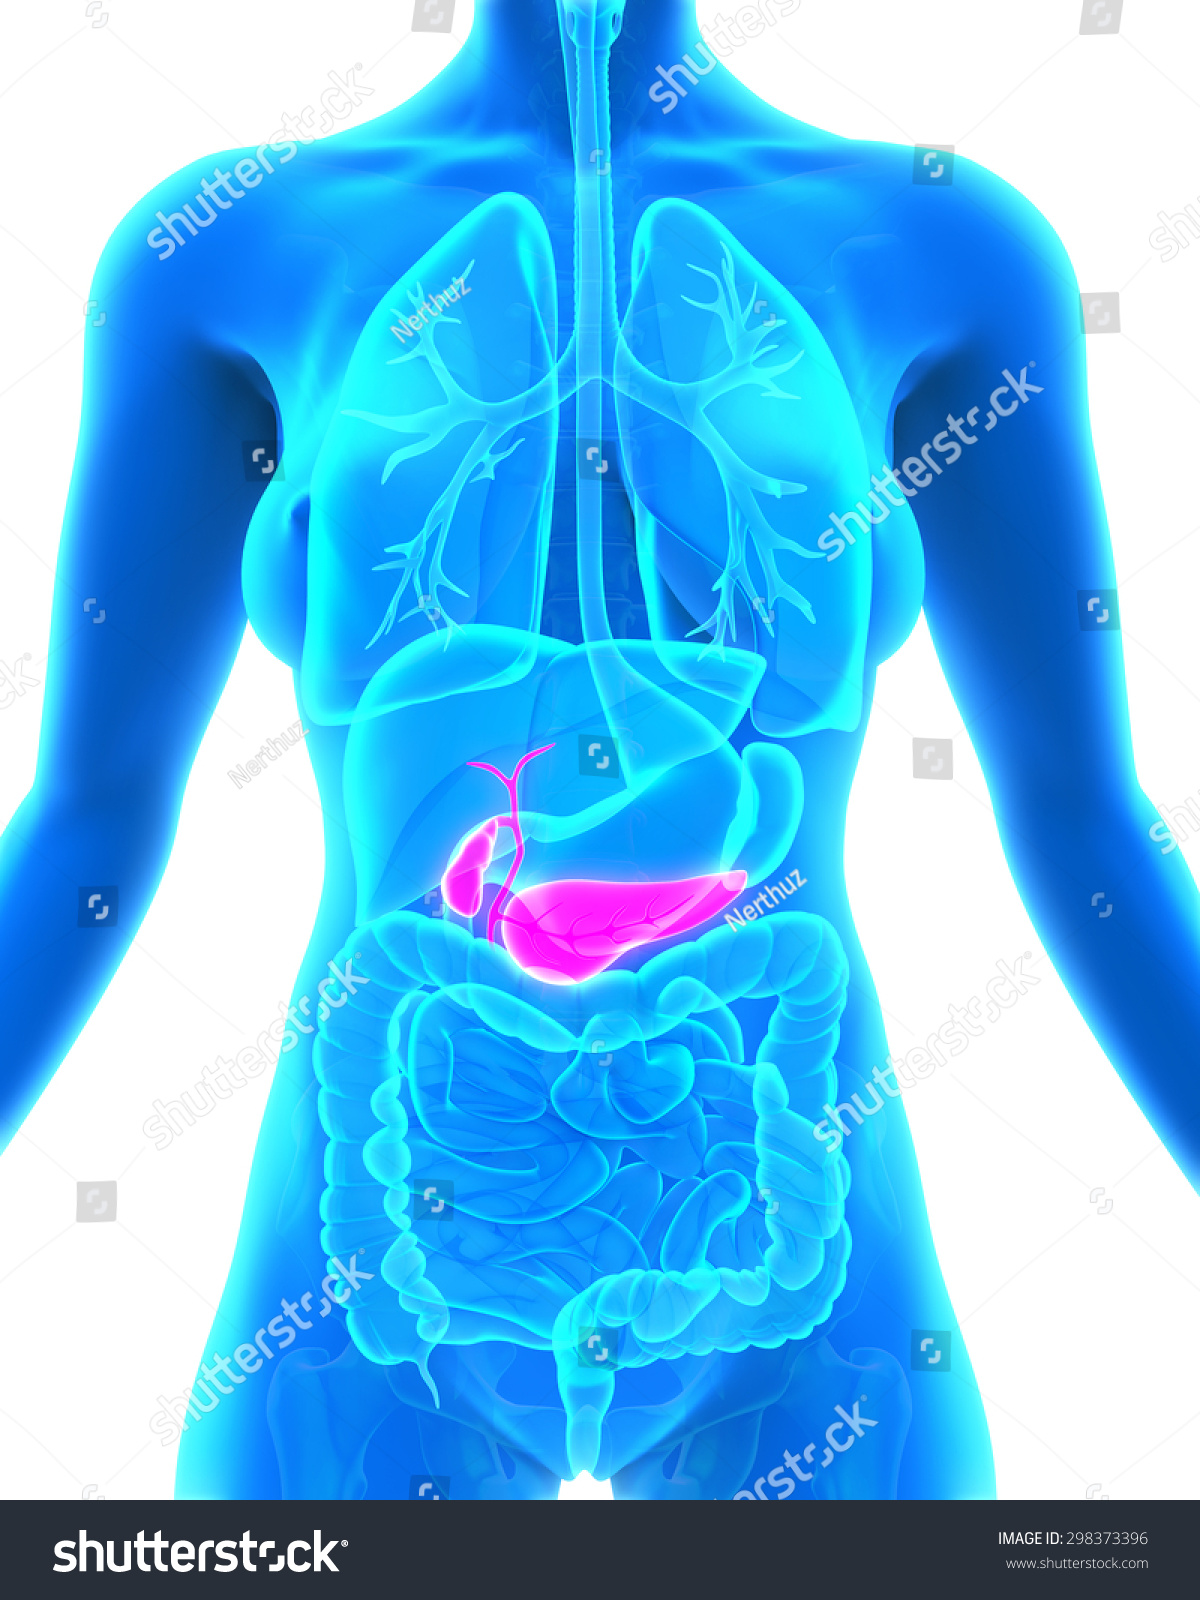 Human Gallbladder Pancreas Anatomy Stock Illustration 298373396 ...